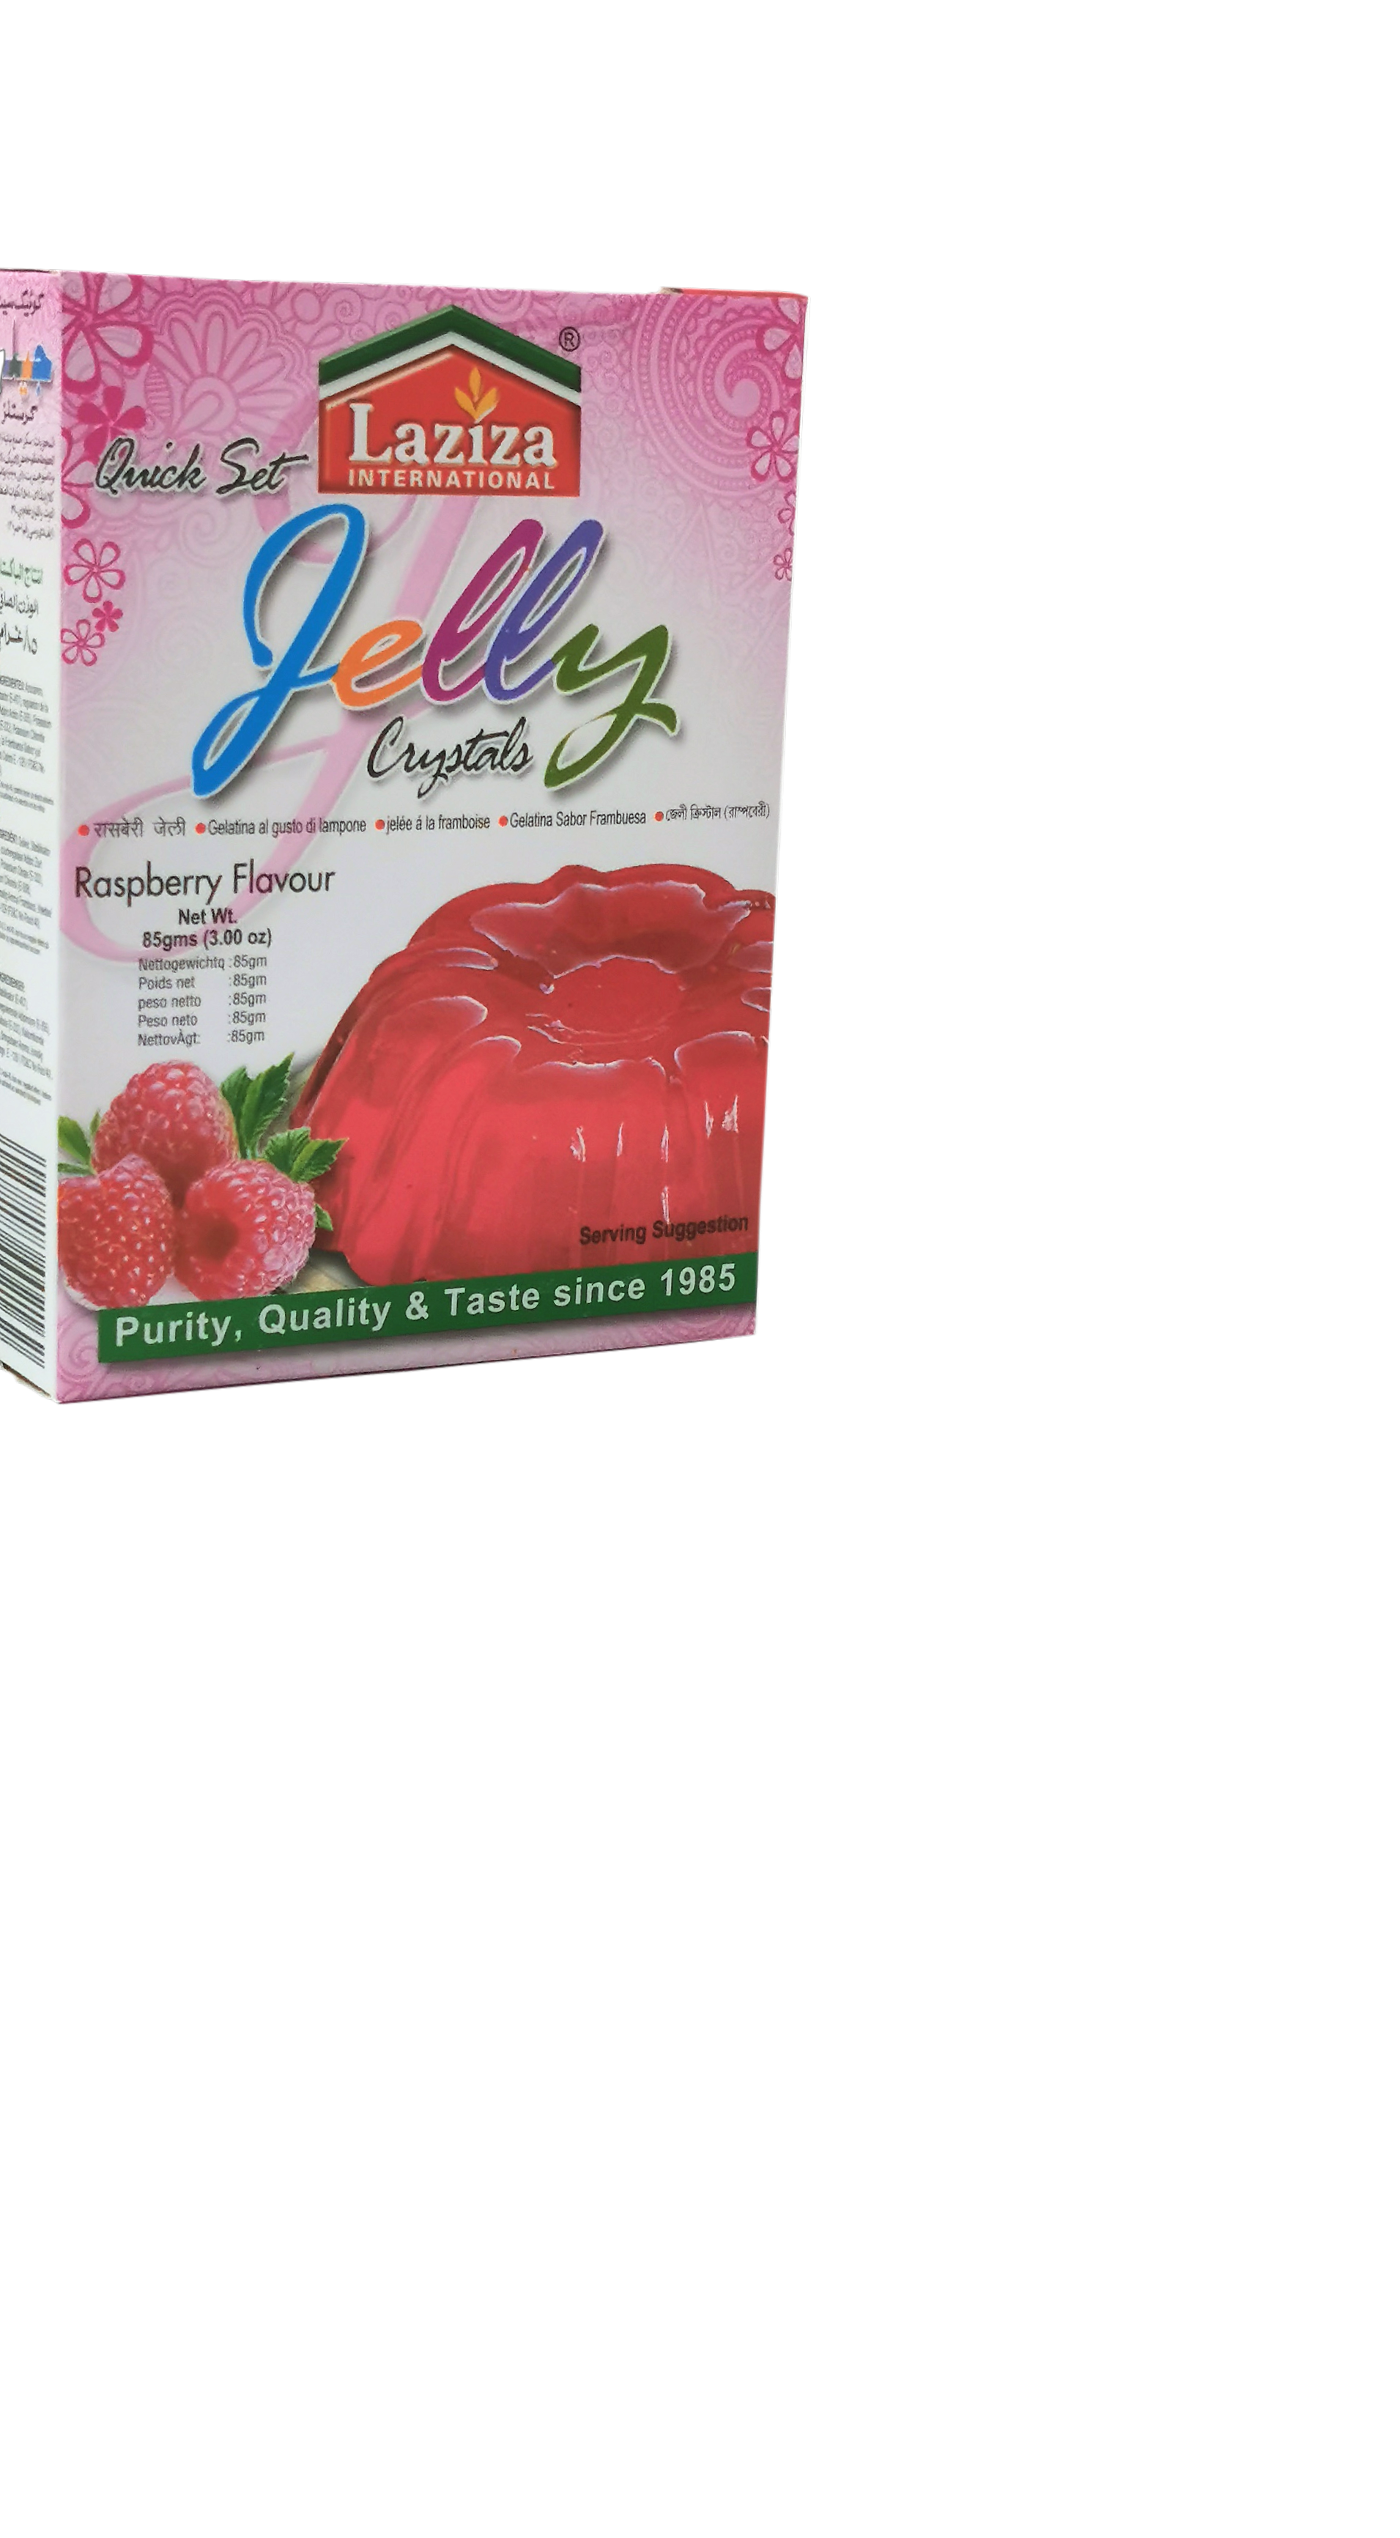 Laziza Jelly Crystals 
Raspberry Flavour